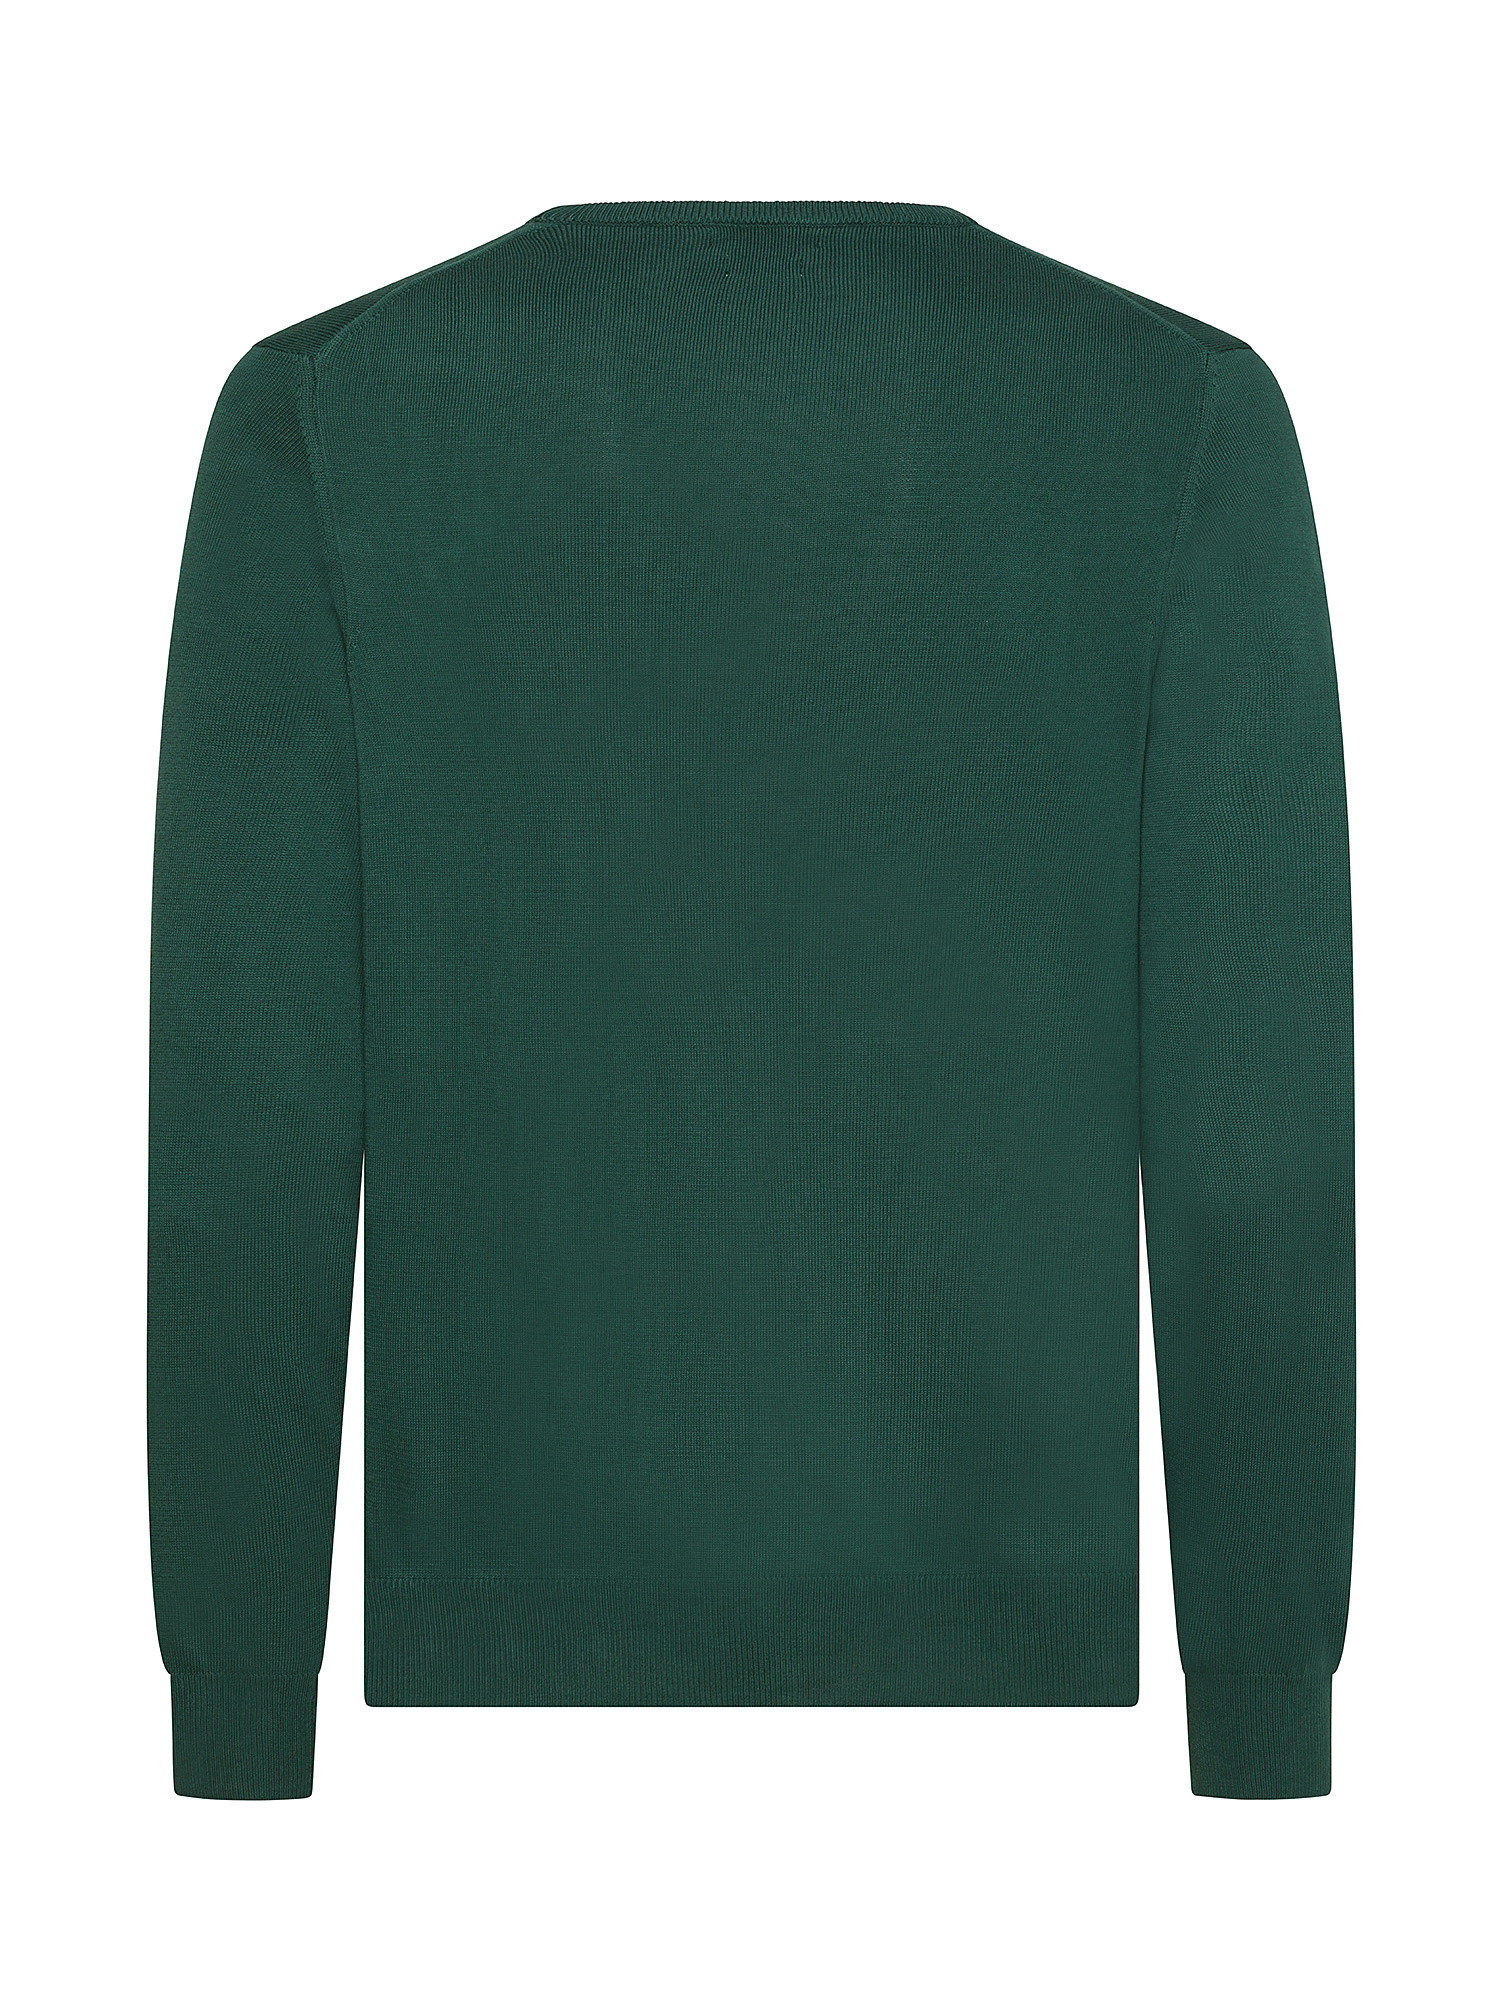 Luca D'Altieri - Crew neck sweater in extrafine pure cotton, Dark Green, large image number 1